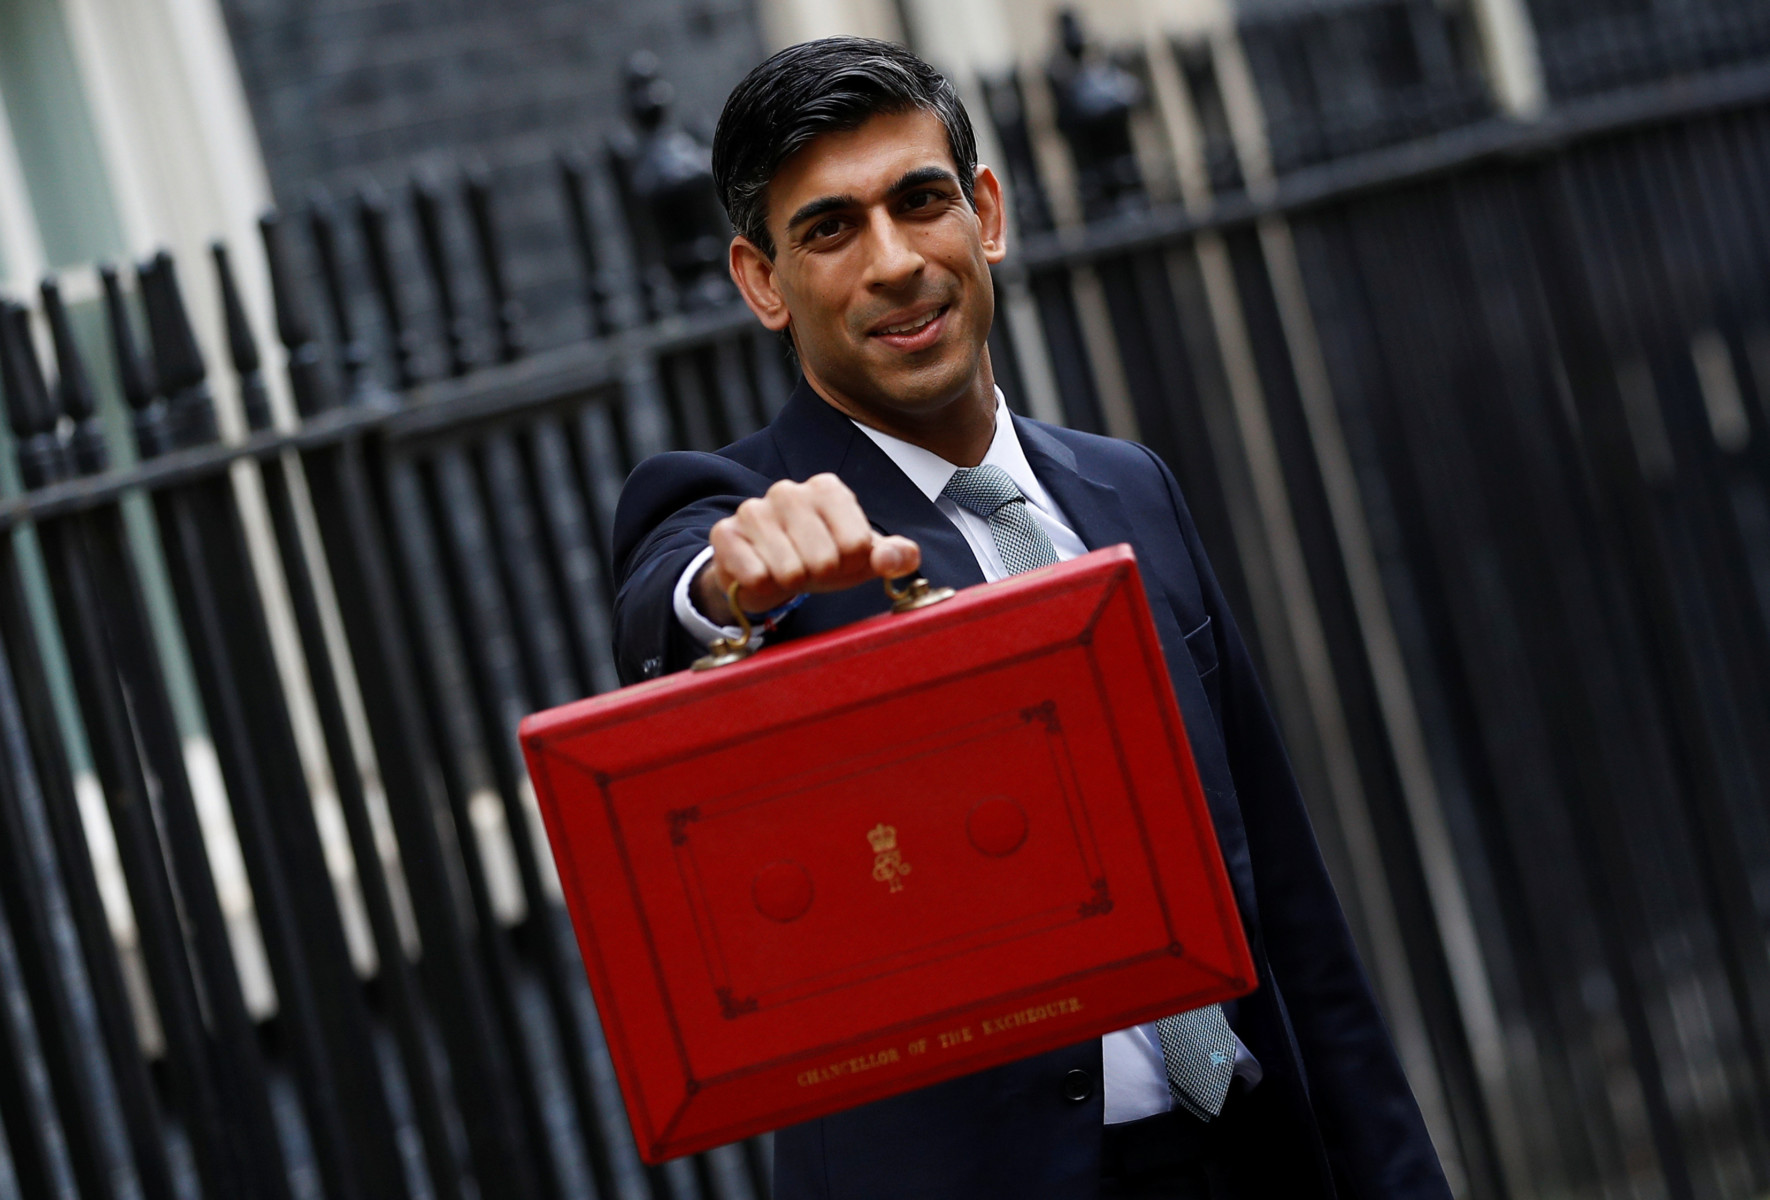 Rushni Sunak and Budget briefcase